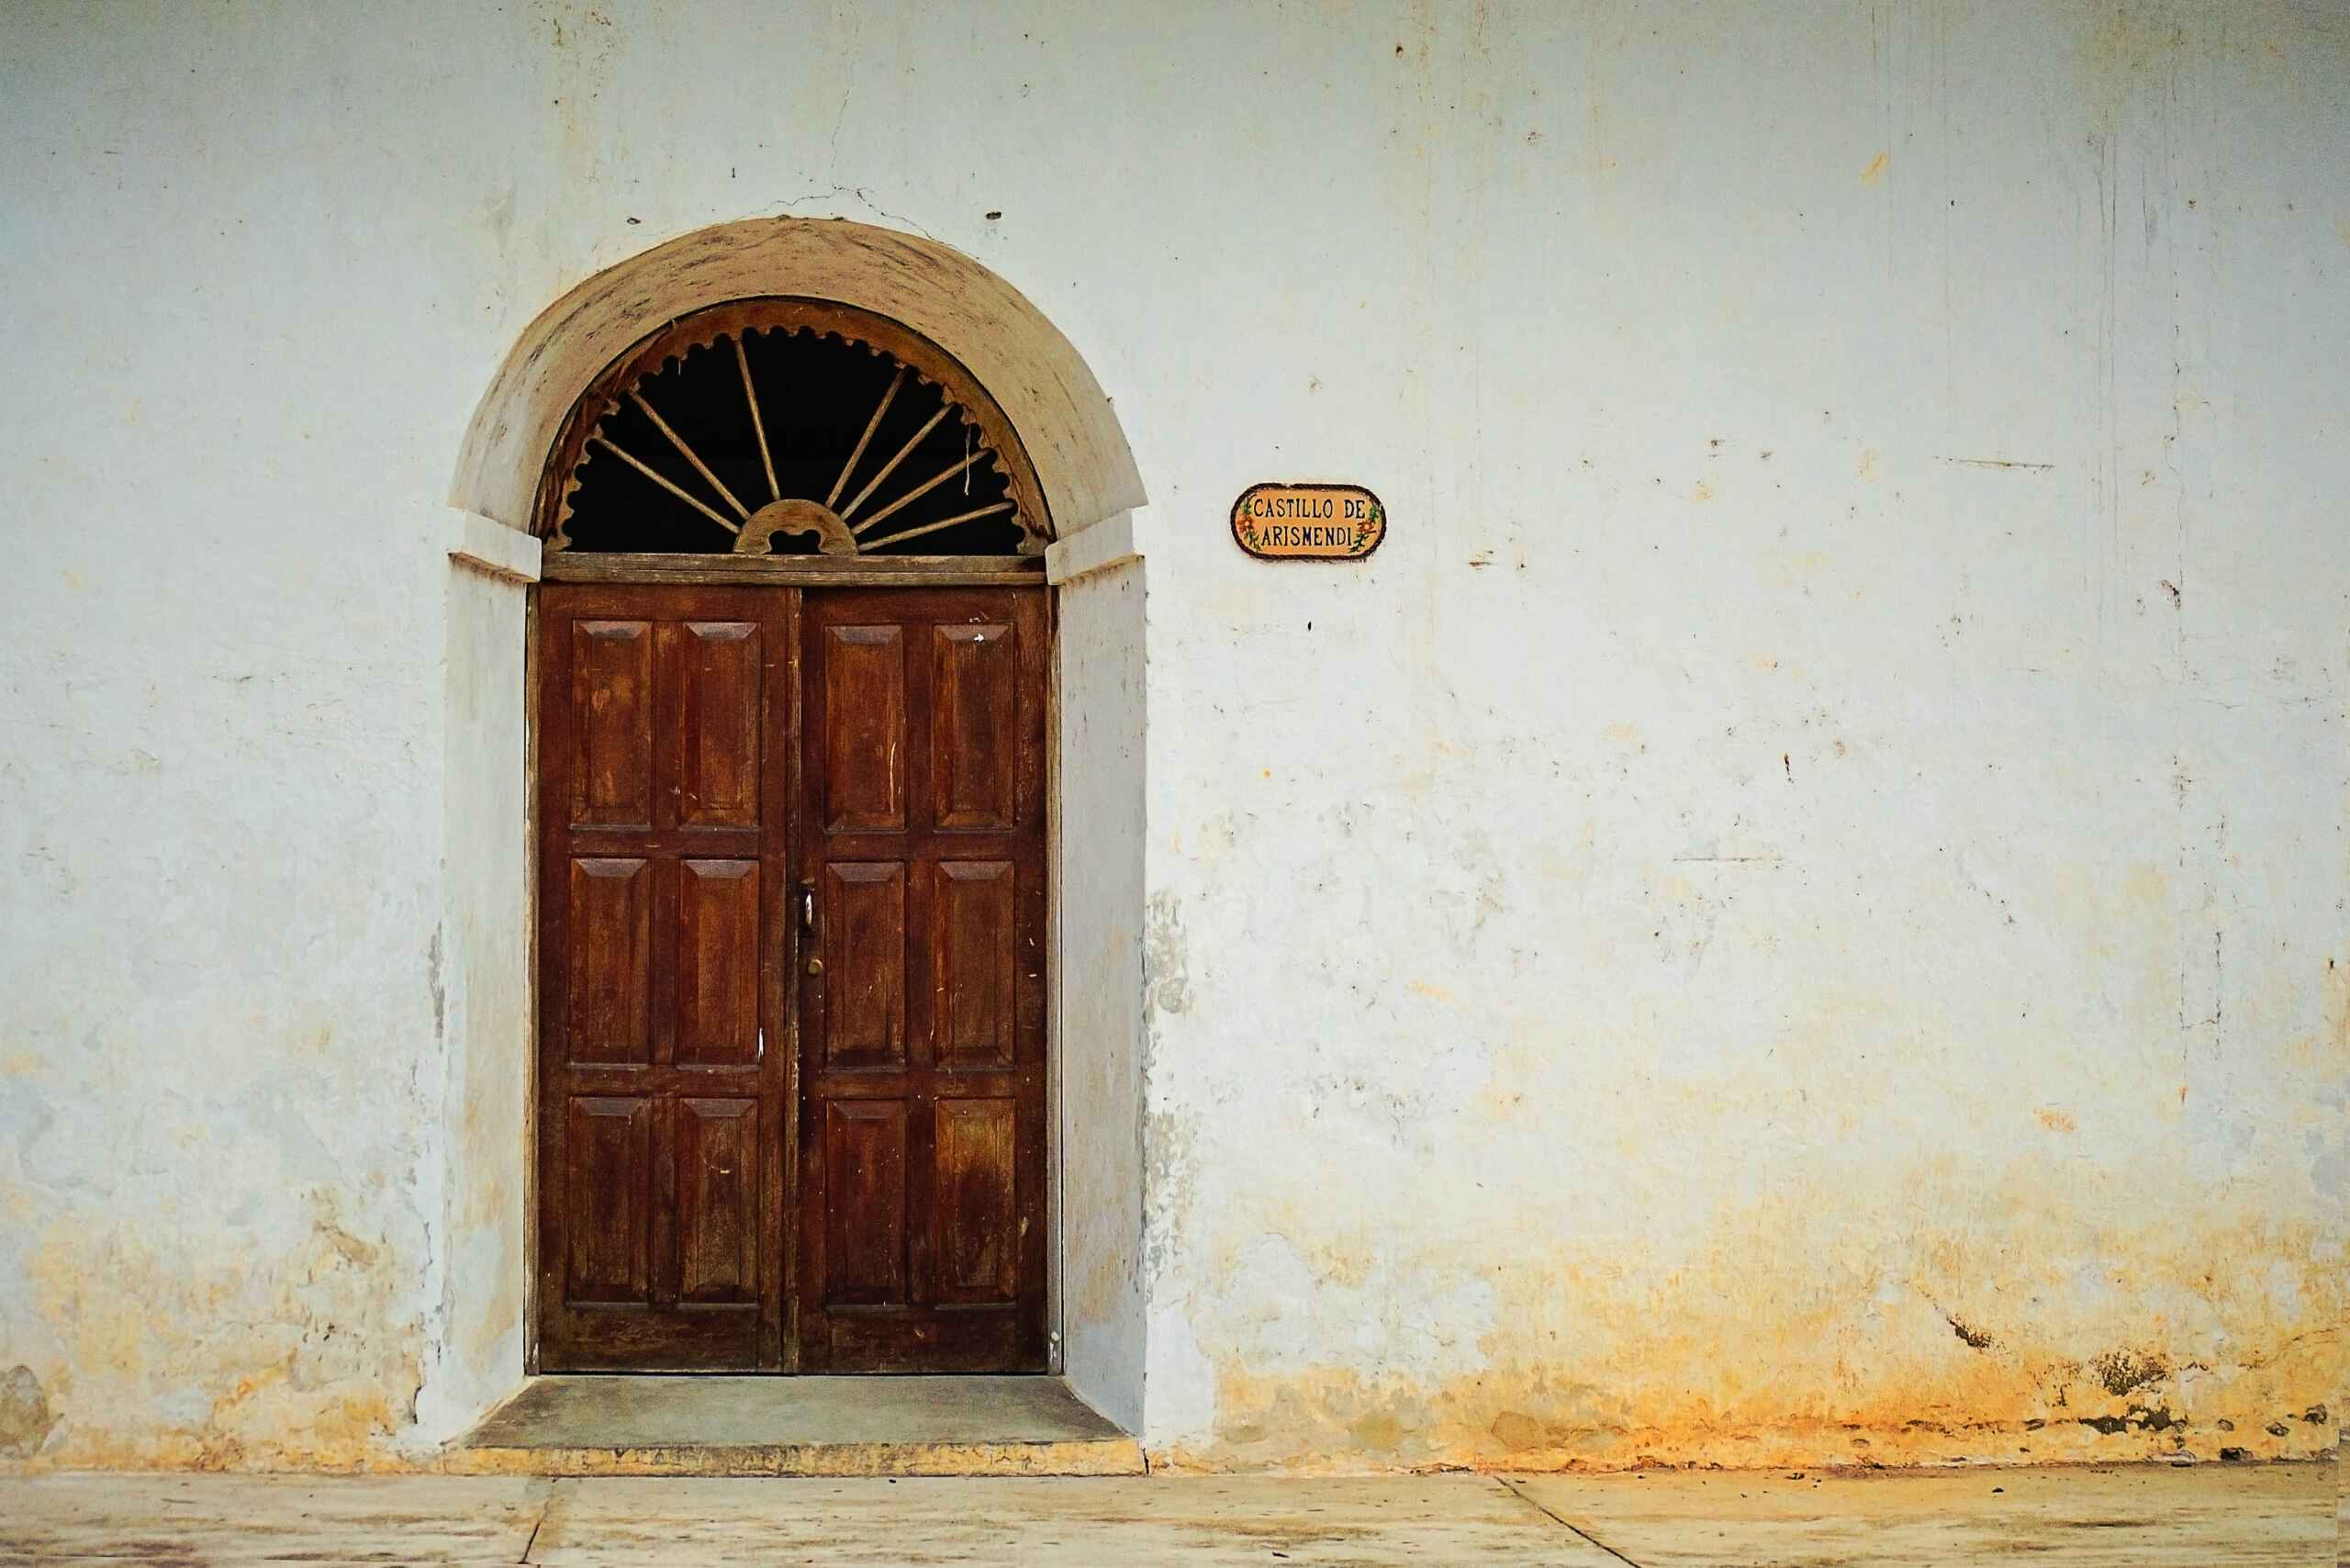 The Doors - Simple English Wikipedia, the free encyclopedia